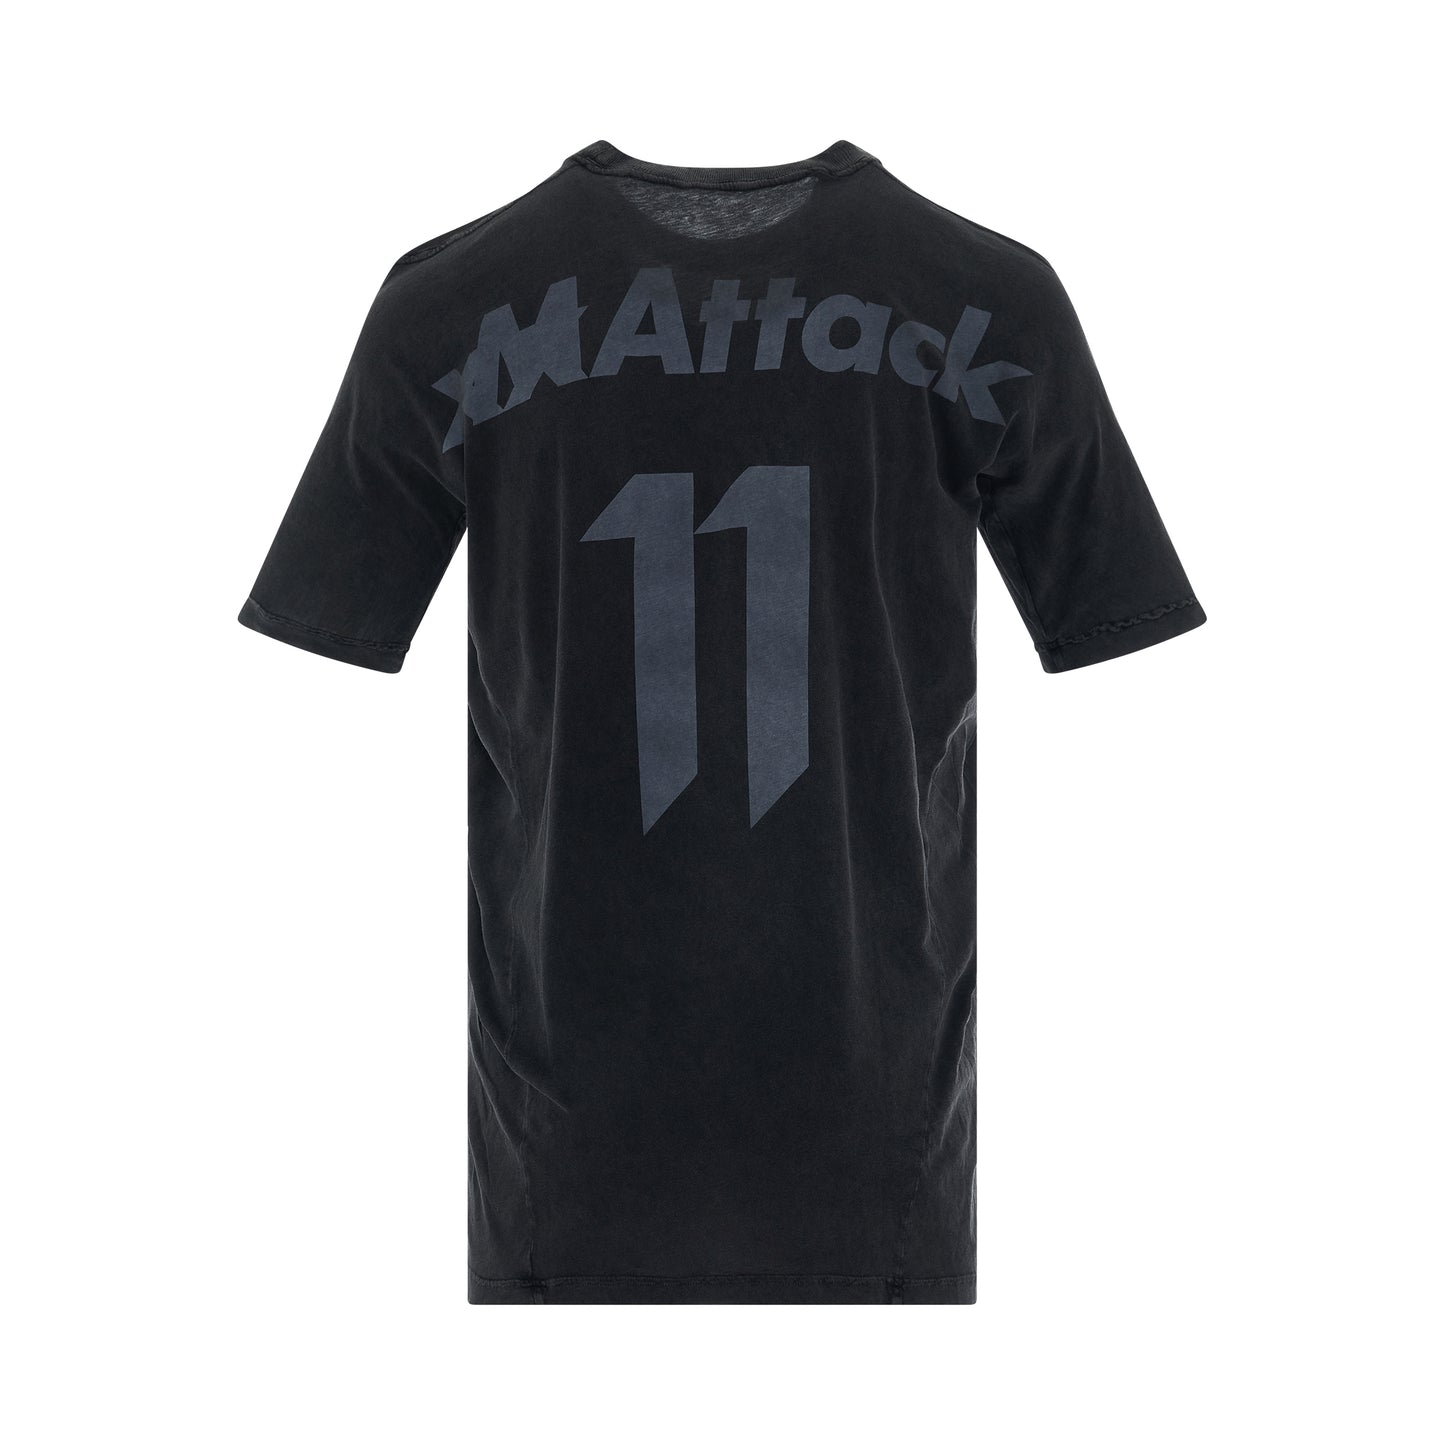 Massive Attack Football T-Shirt